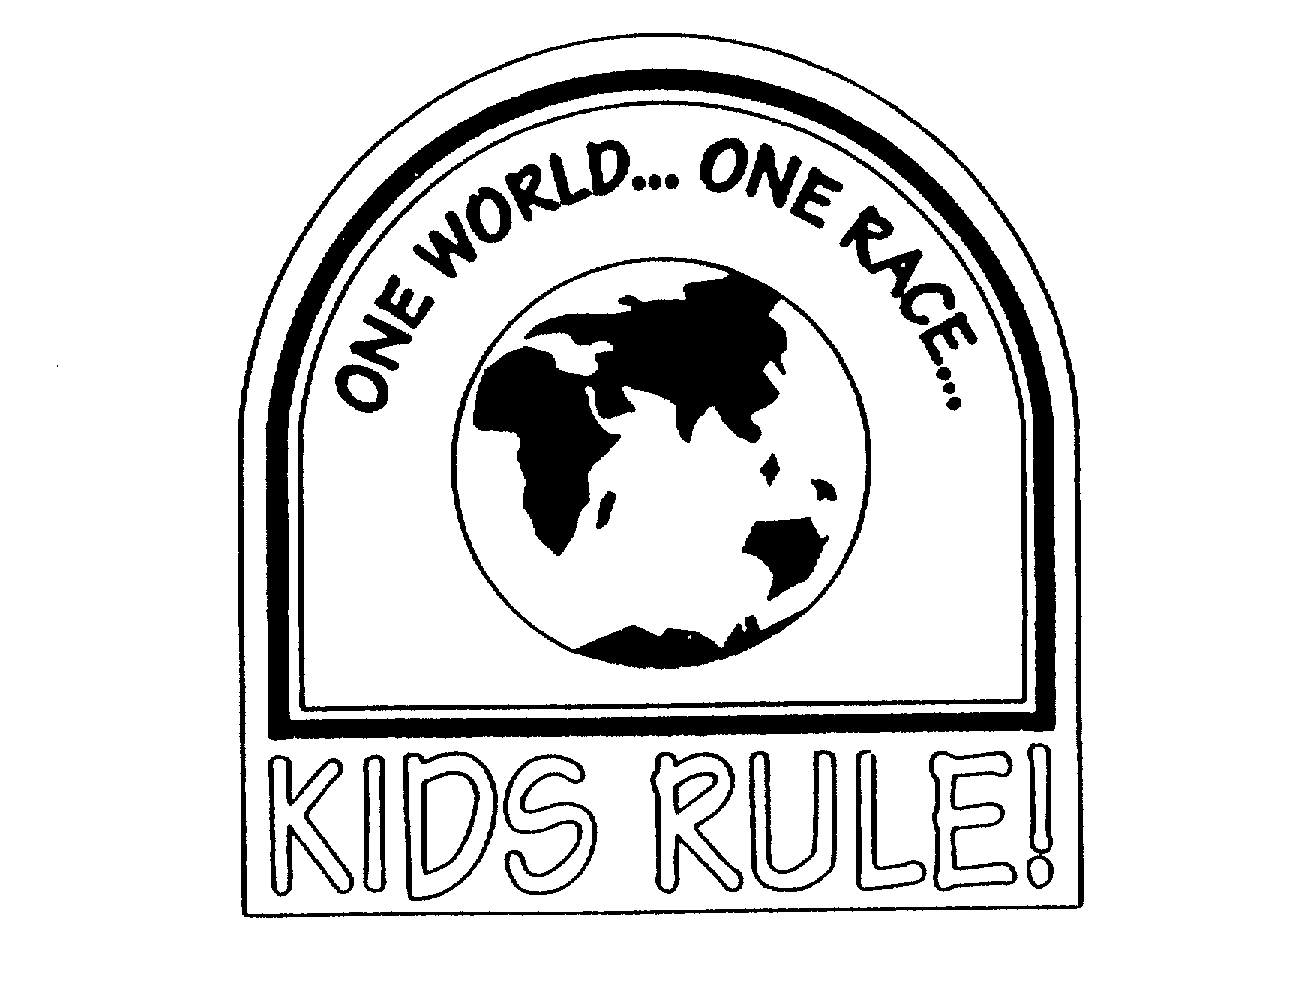  ONE WORLD...ONE RACE...KIDS RULE!